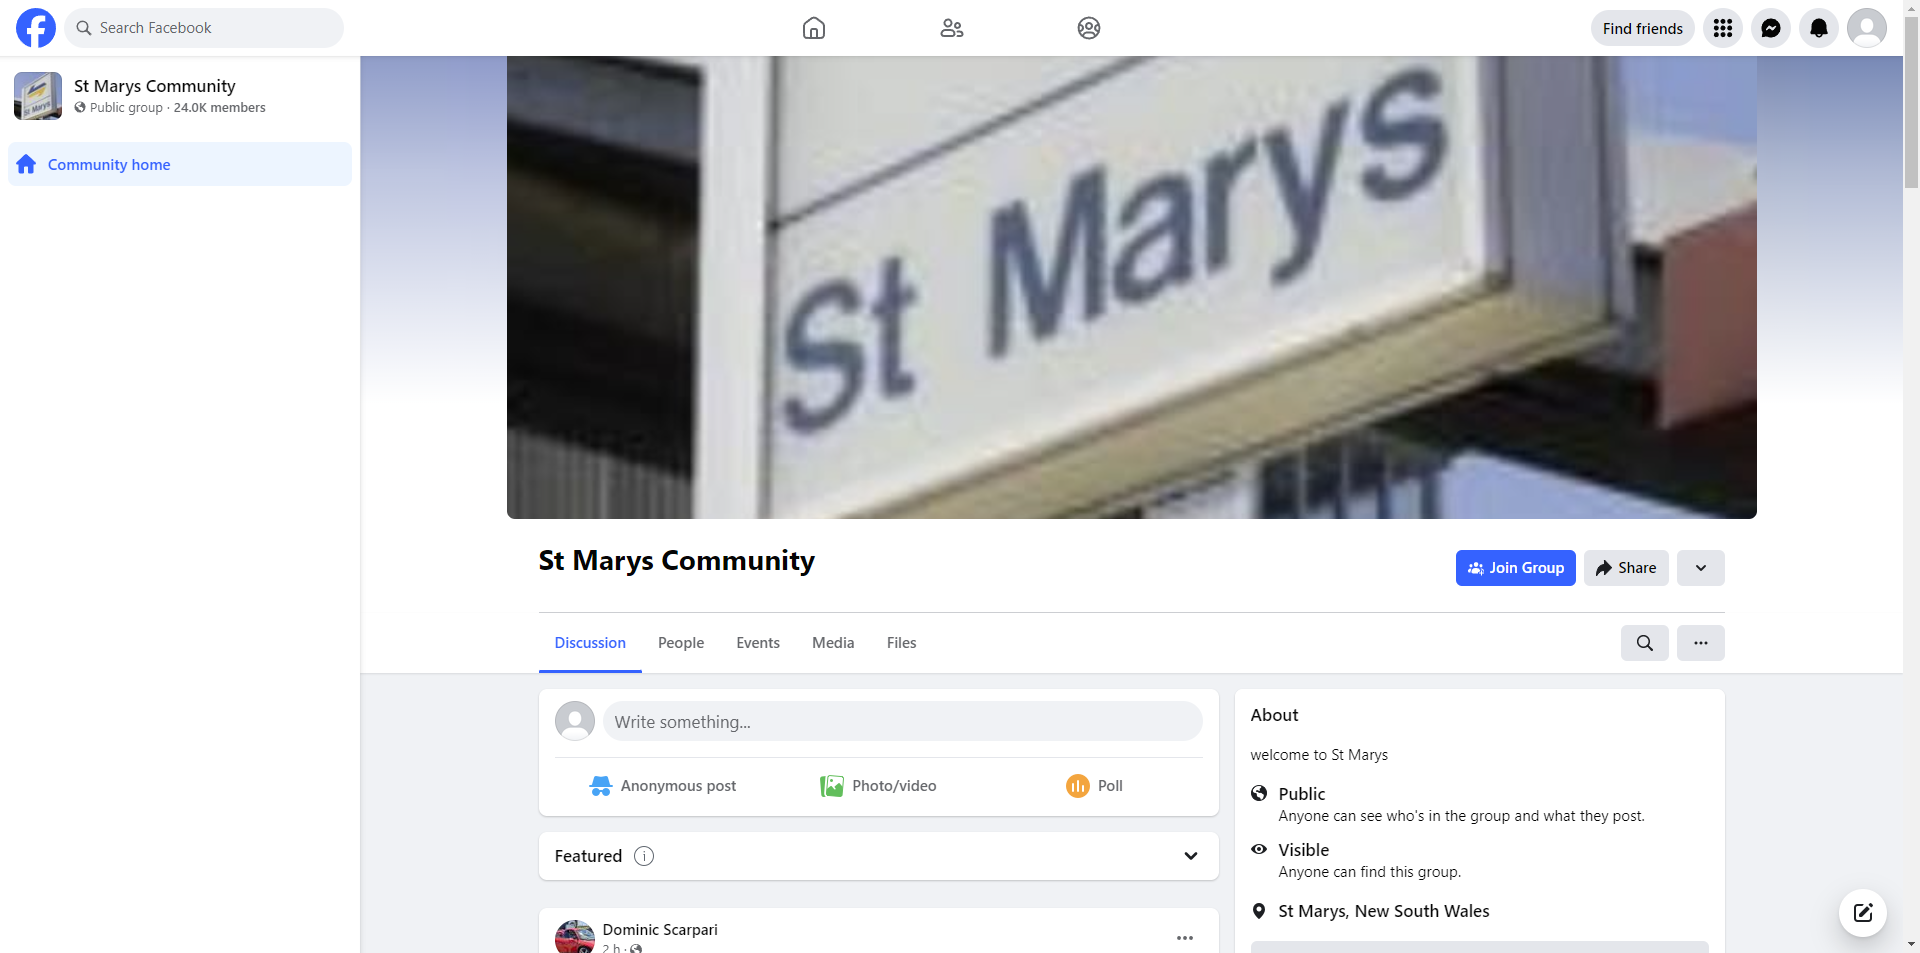 St Marys Community